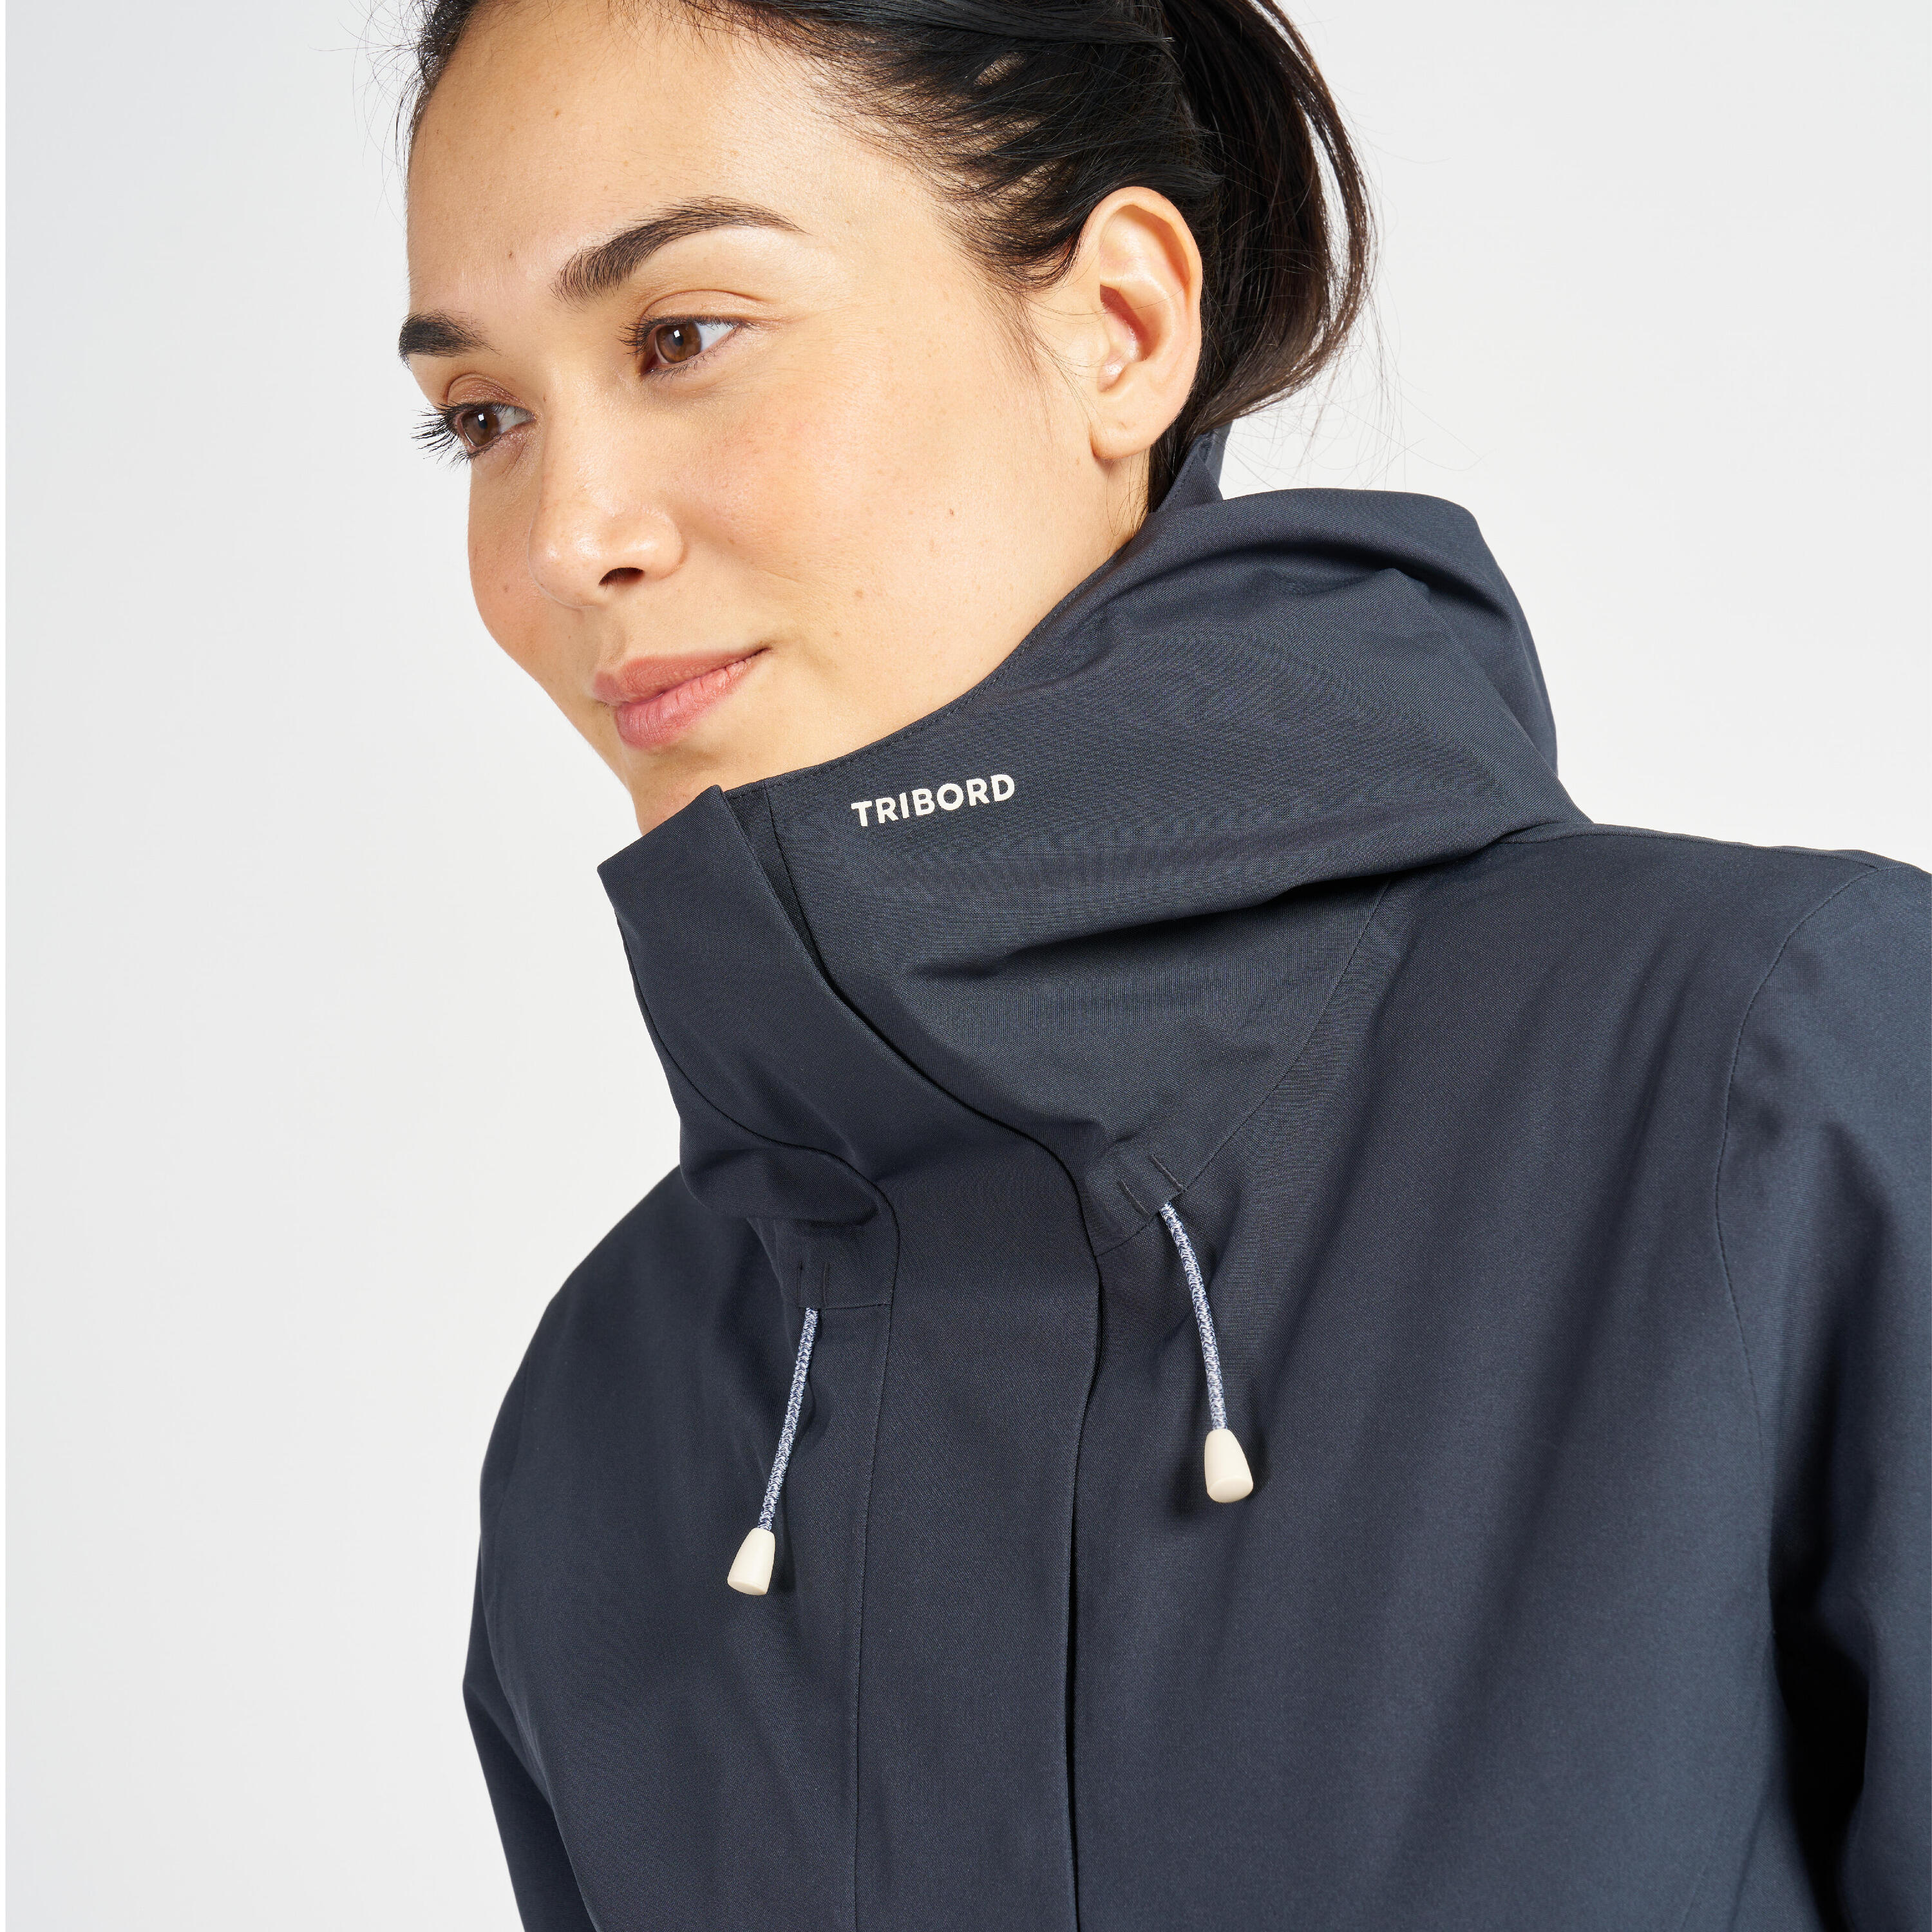 Women's Warm Waterproof Windproof Jacket SAILING 300 - Dark grey 4/13